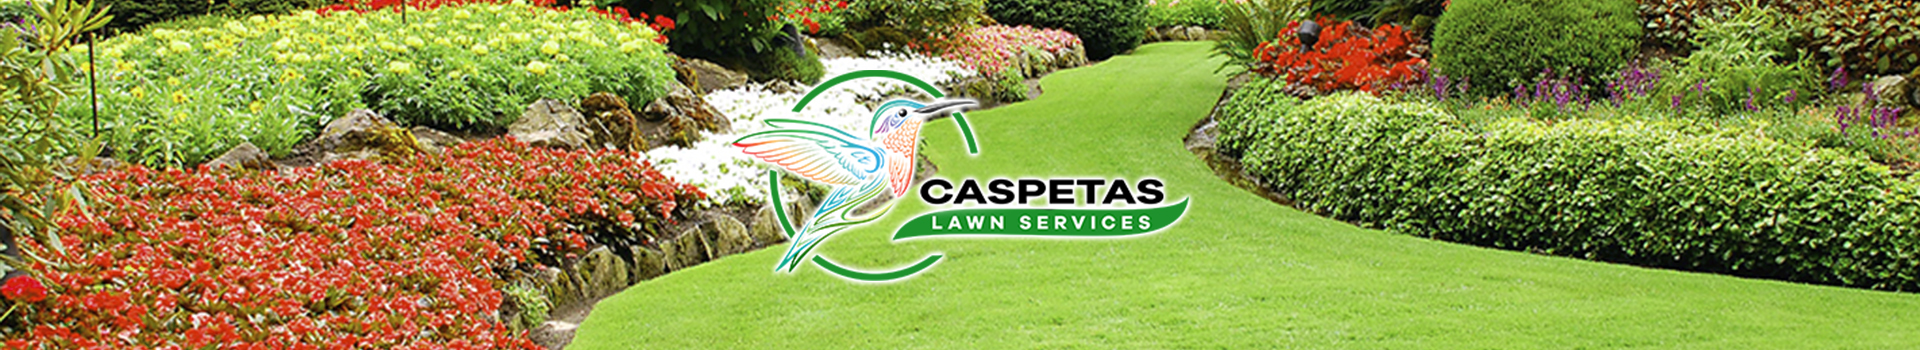 Caspeta Lawn Service - header